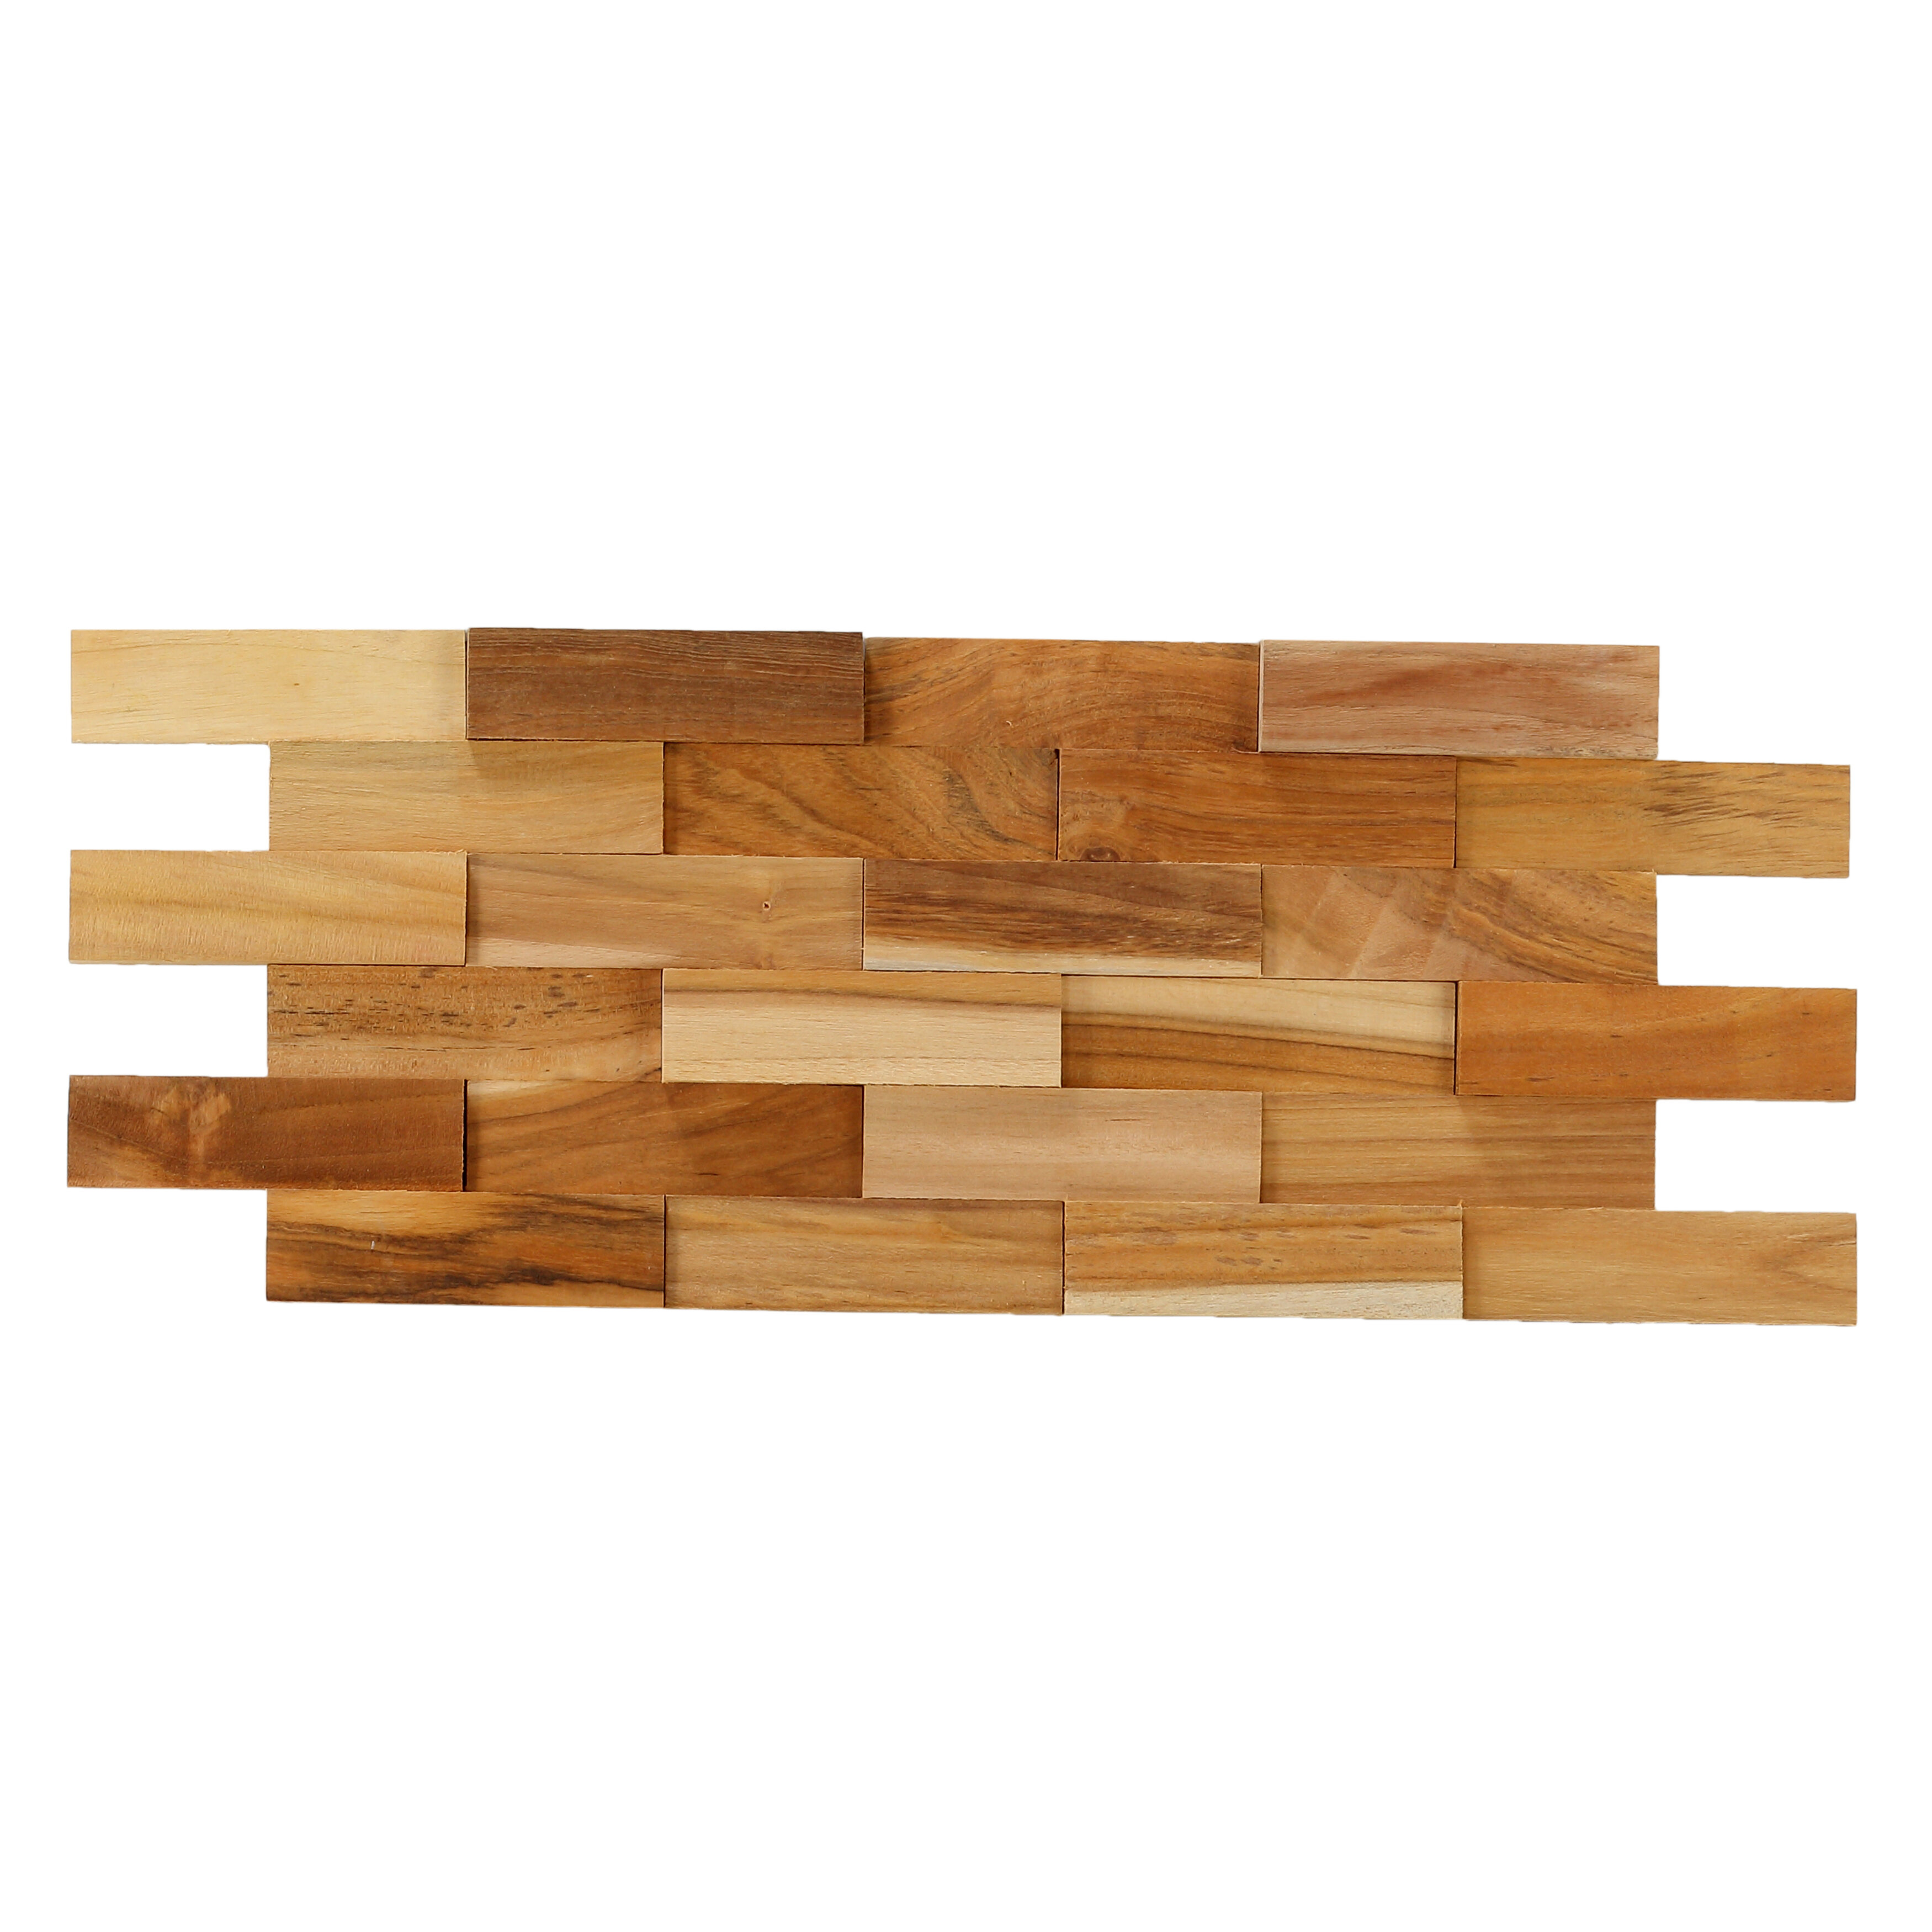 Baredecor Brick 3d Pattern Wood Tile In Brown Reviews Wayfair